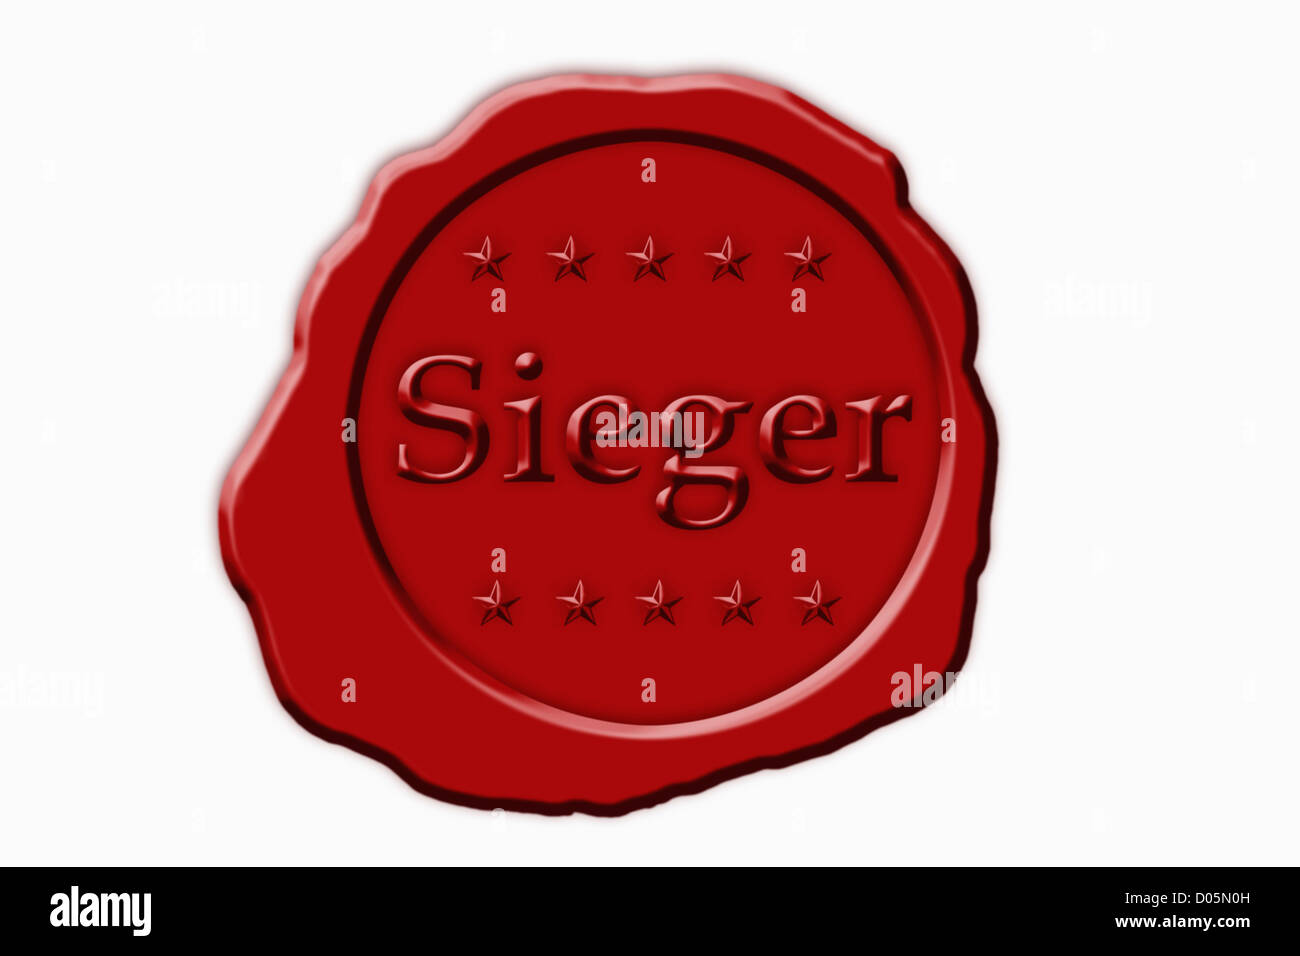 Detailansicht eines roten Siegels mit der Aufschrift Sieger | Dettaglio foto di un sigillo rosso con il tedesco vincitore di iscrizione Foto Stock